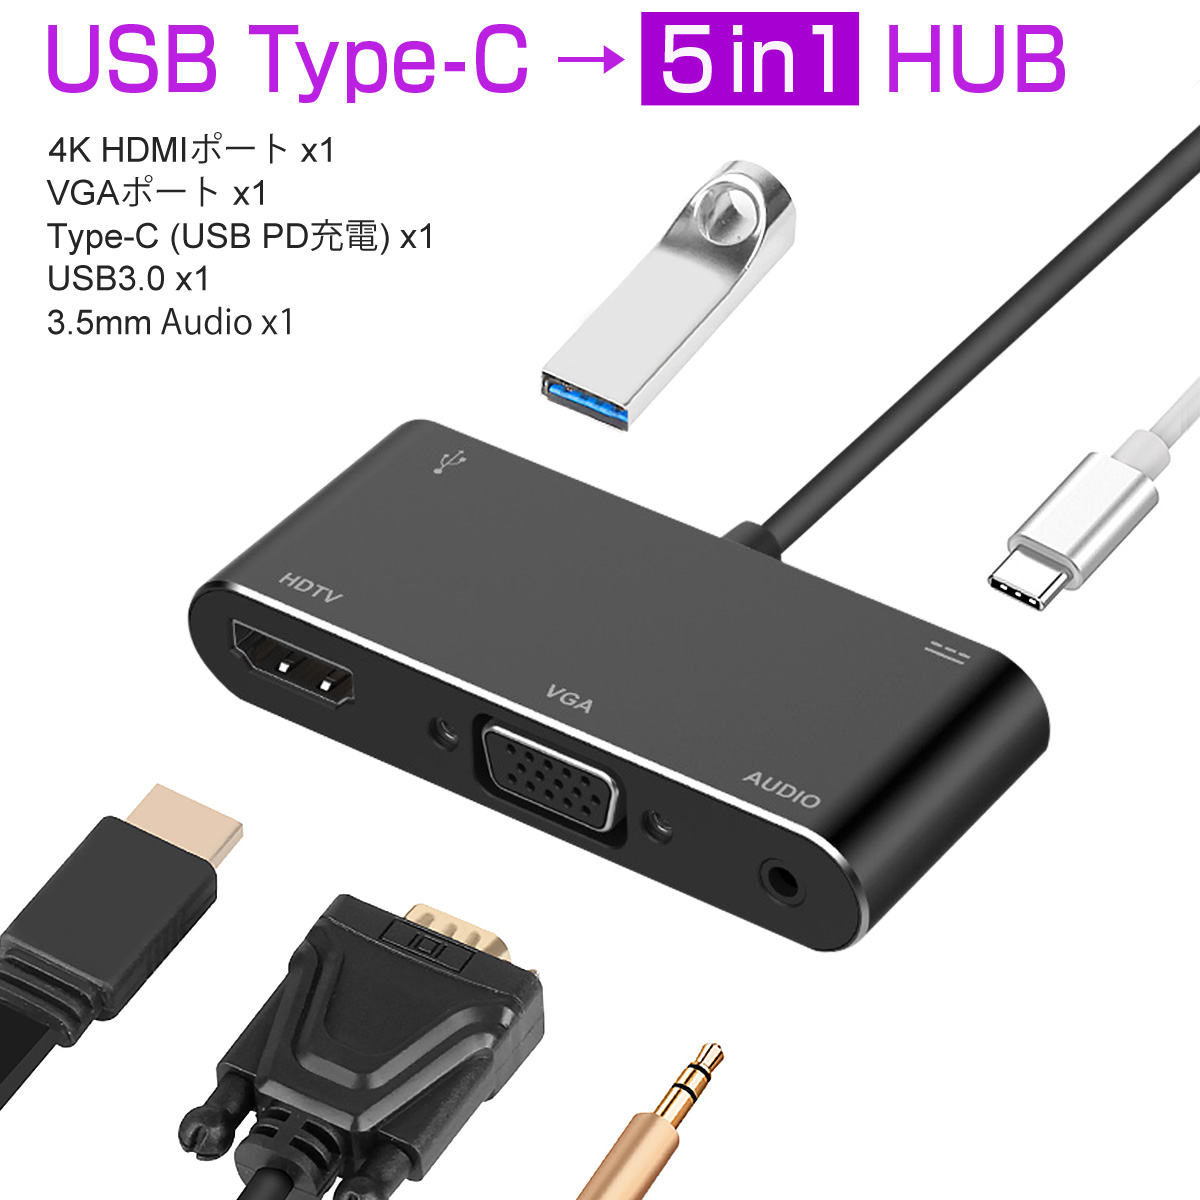 USB Type-C ハブ 5in1 4K USB3.0 ミラーリング HDMI VGA 個別のモニター PD充電 スマホゲーム 拡張 変換 黒 軽量 MacBook Galaxy ChromeBook VAIO Mac Windows対応 1ヶ月保証 SDL